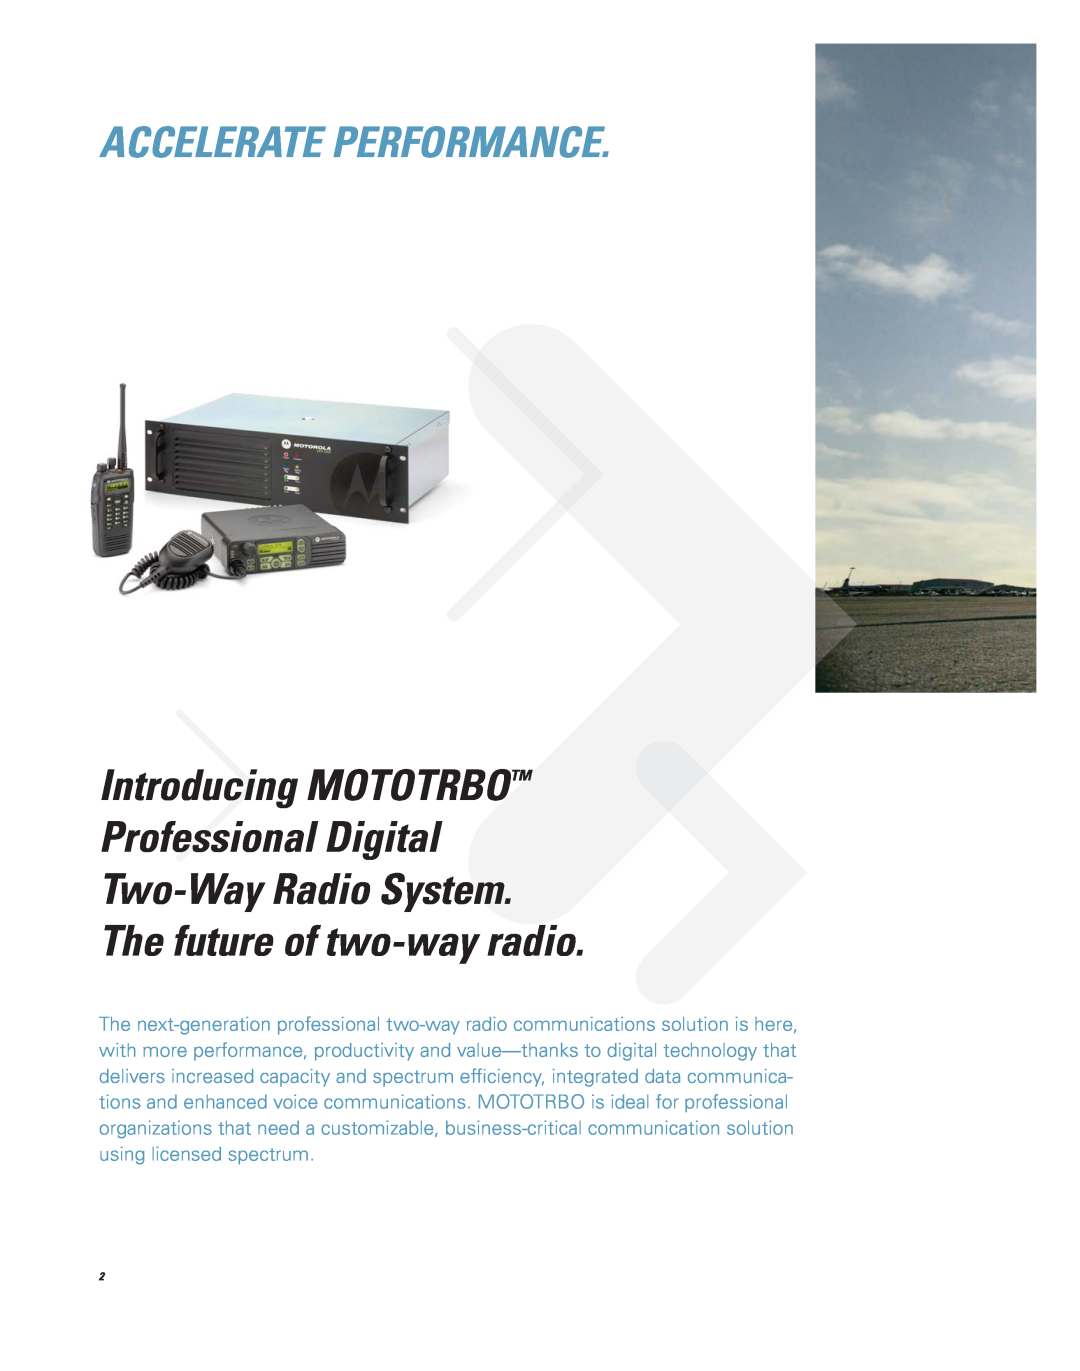 Motorola Professional Digital Two-Way Radio System brochure Accelerate Performance, The future of two-way radio 